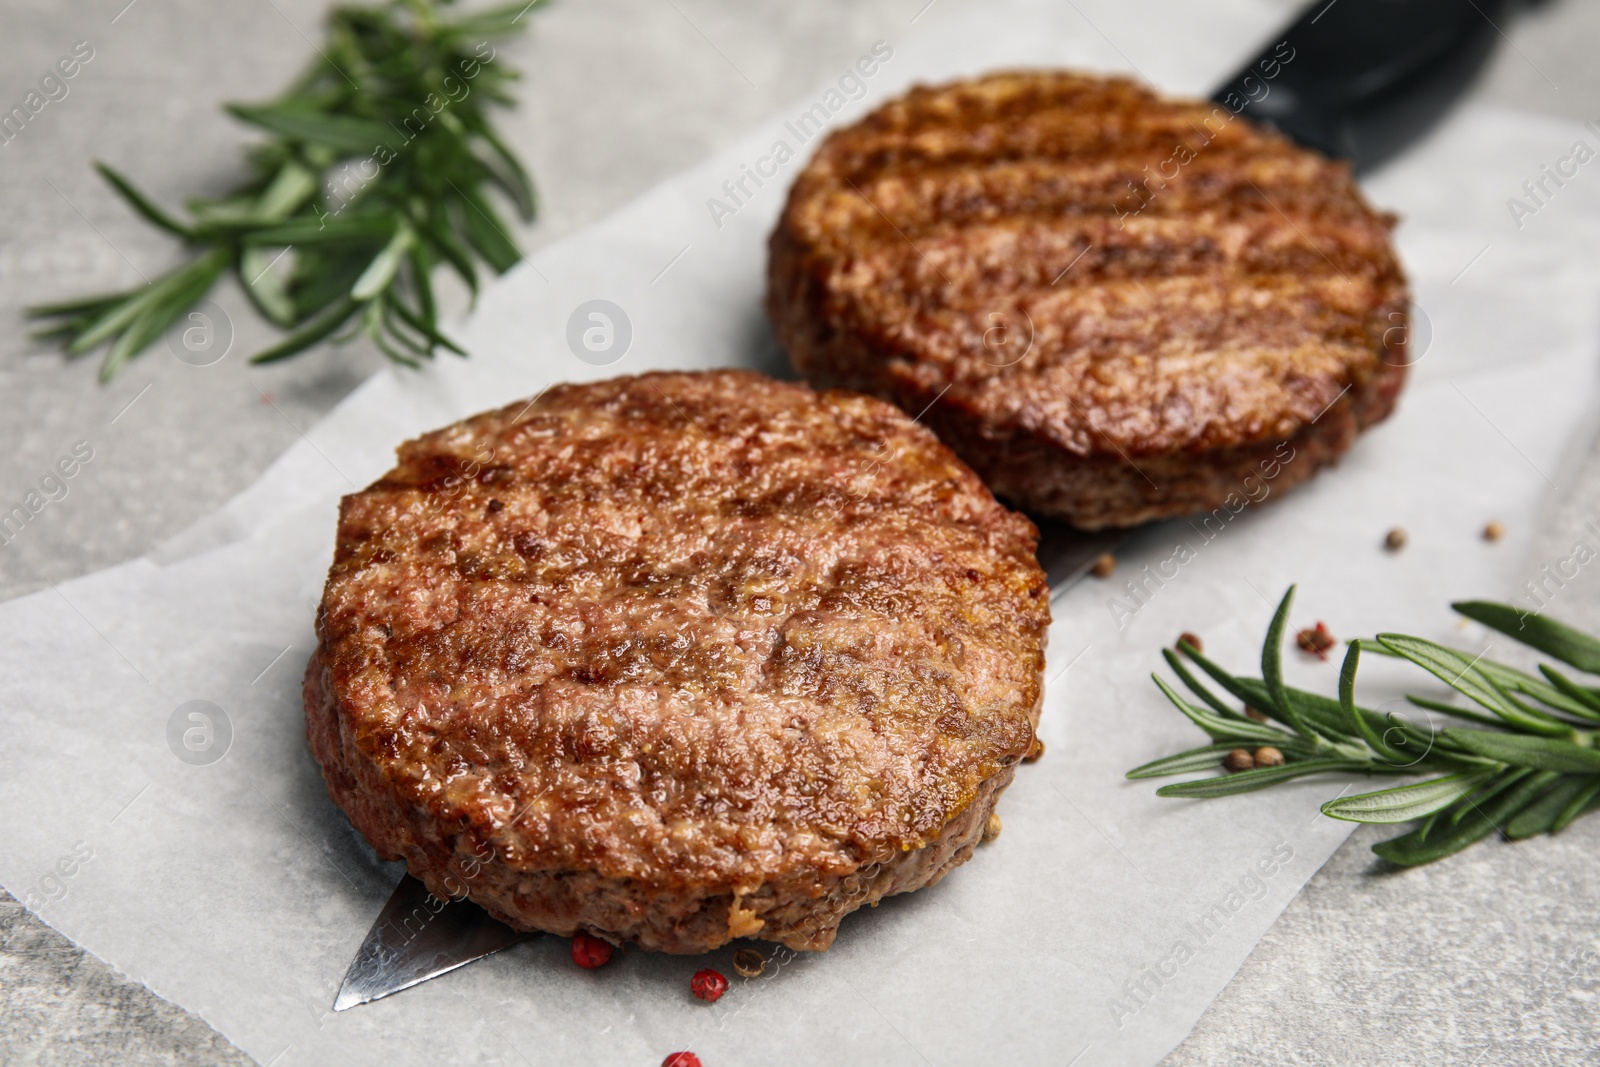 Photo of Tasty grilled hamburger patties, knife and seasonings on grey table, closeup